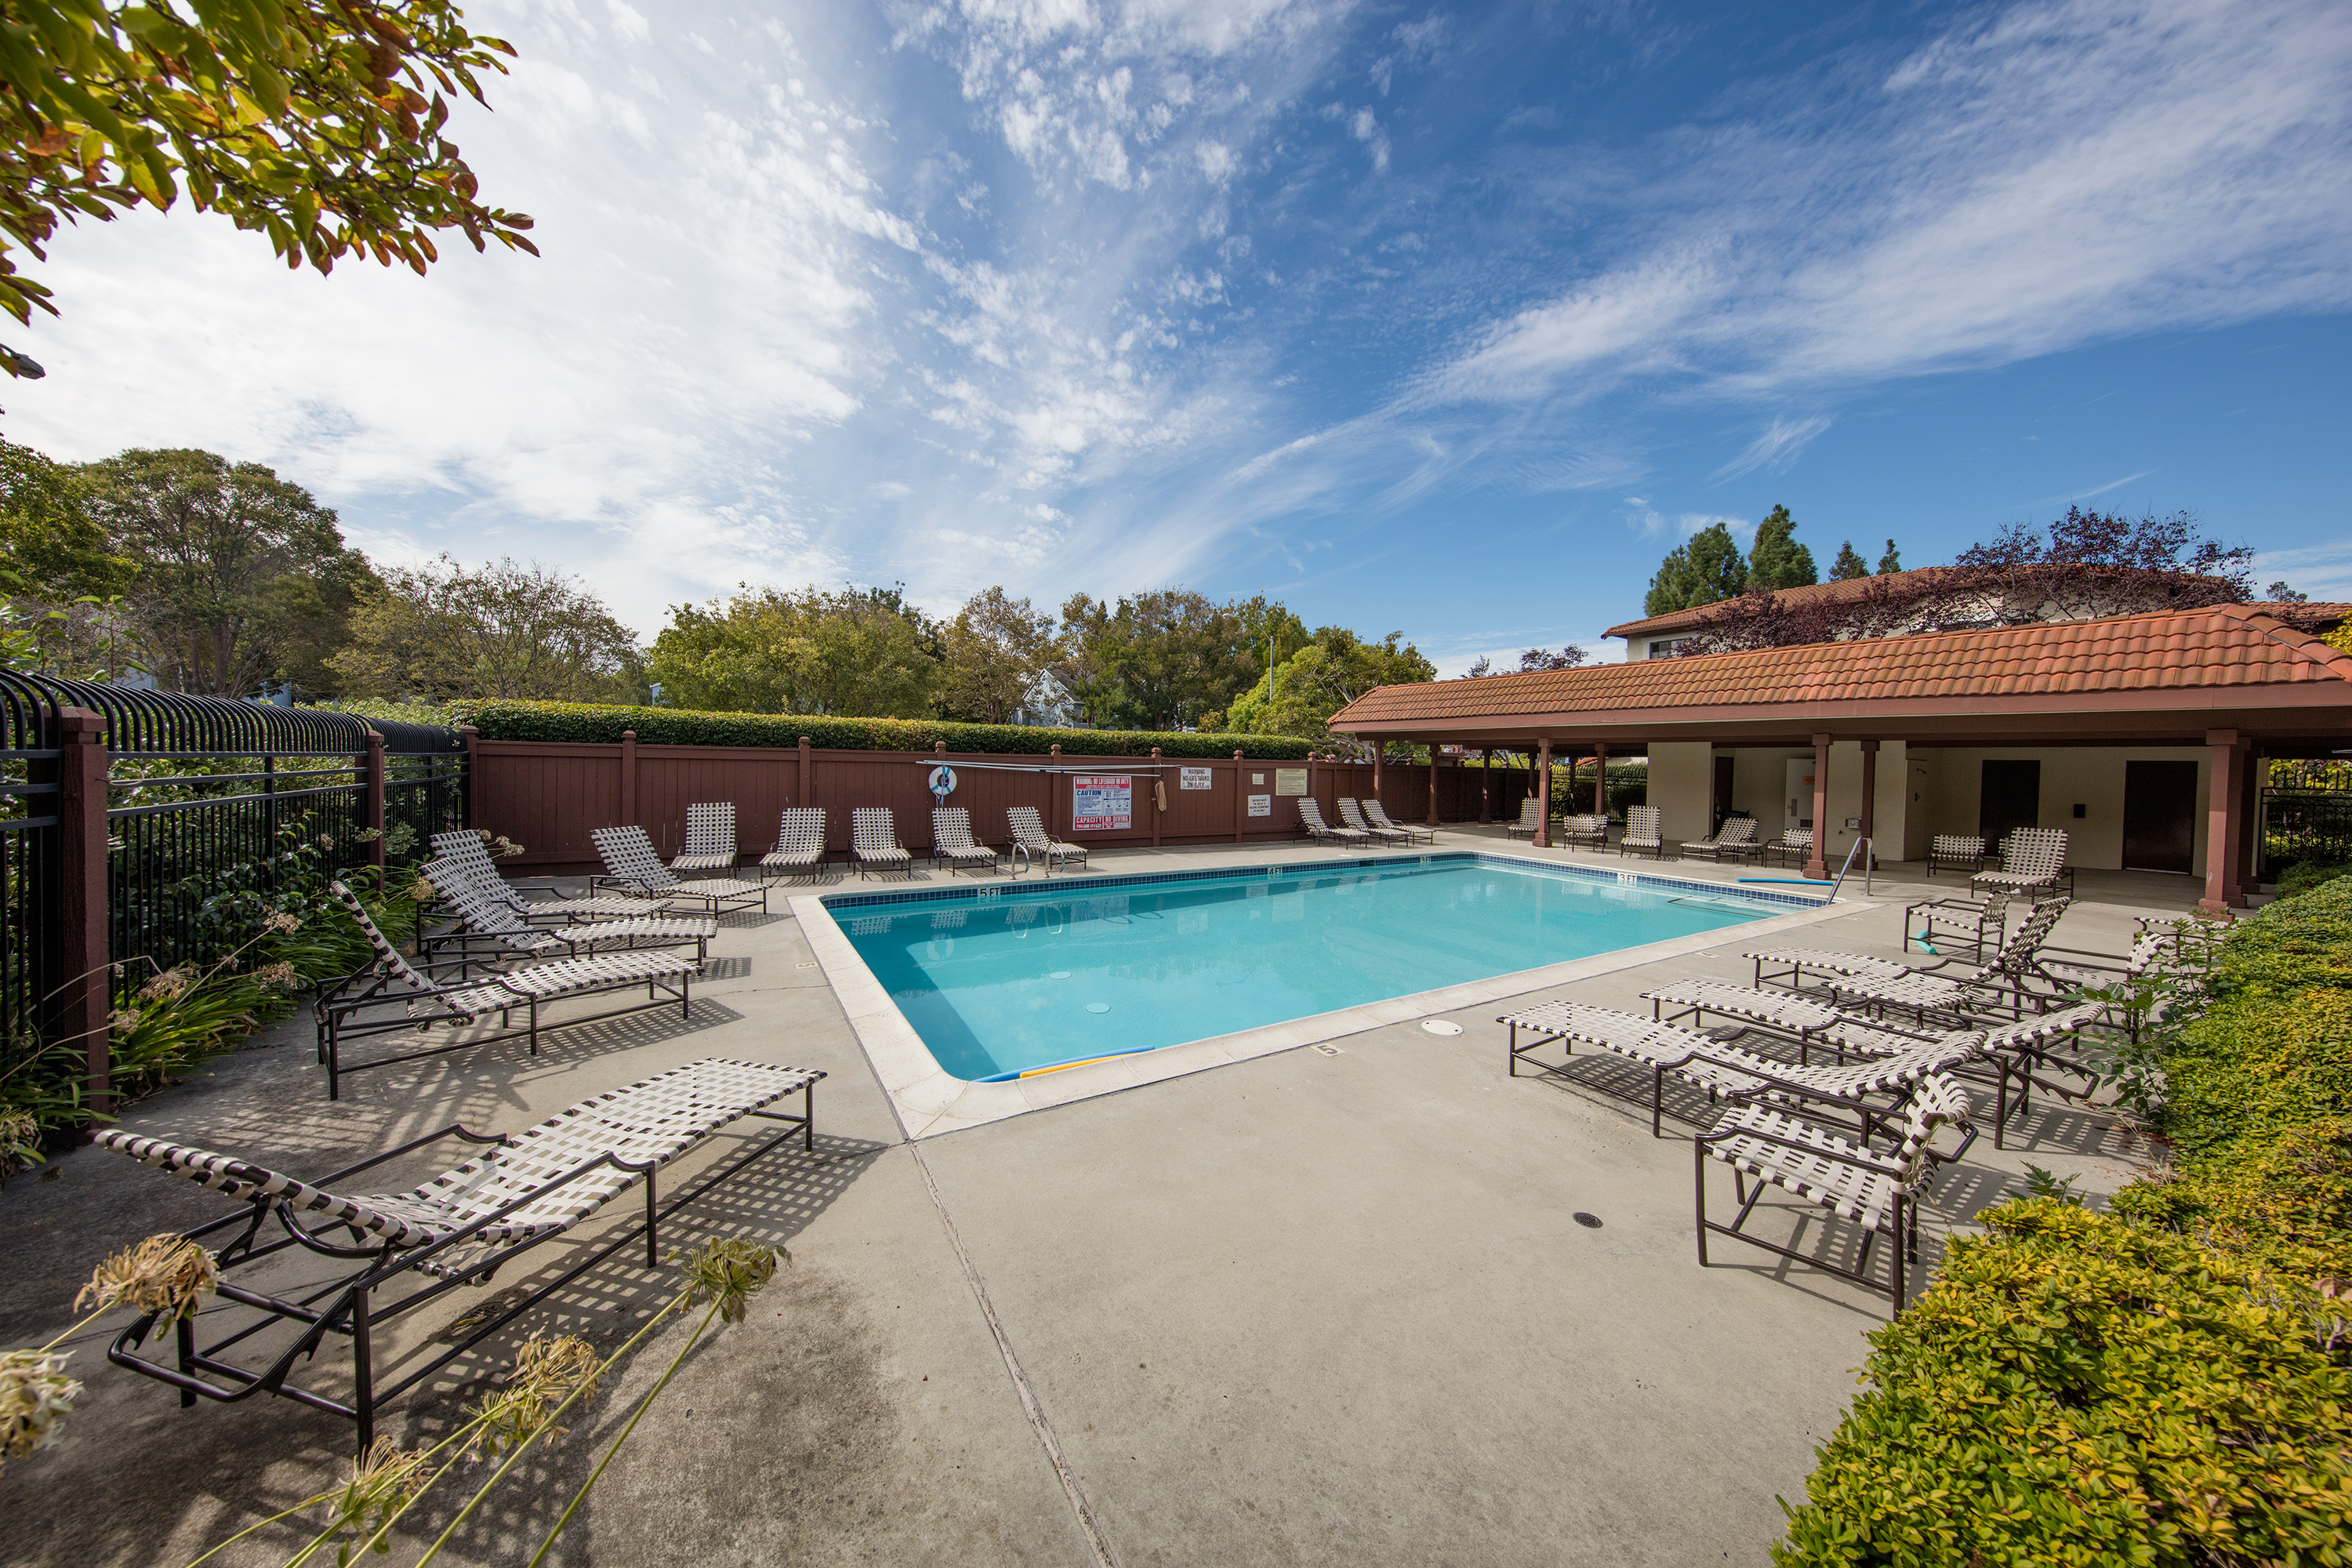 448 Costa Mesa Ter #D, Sunnyvale 94085 - Pool (A)